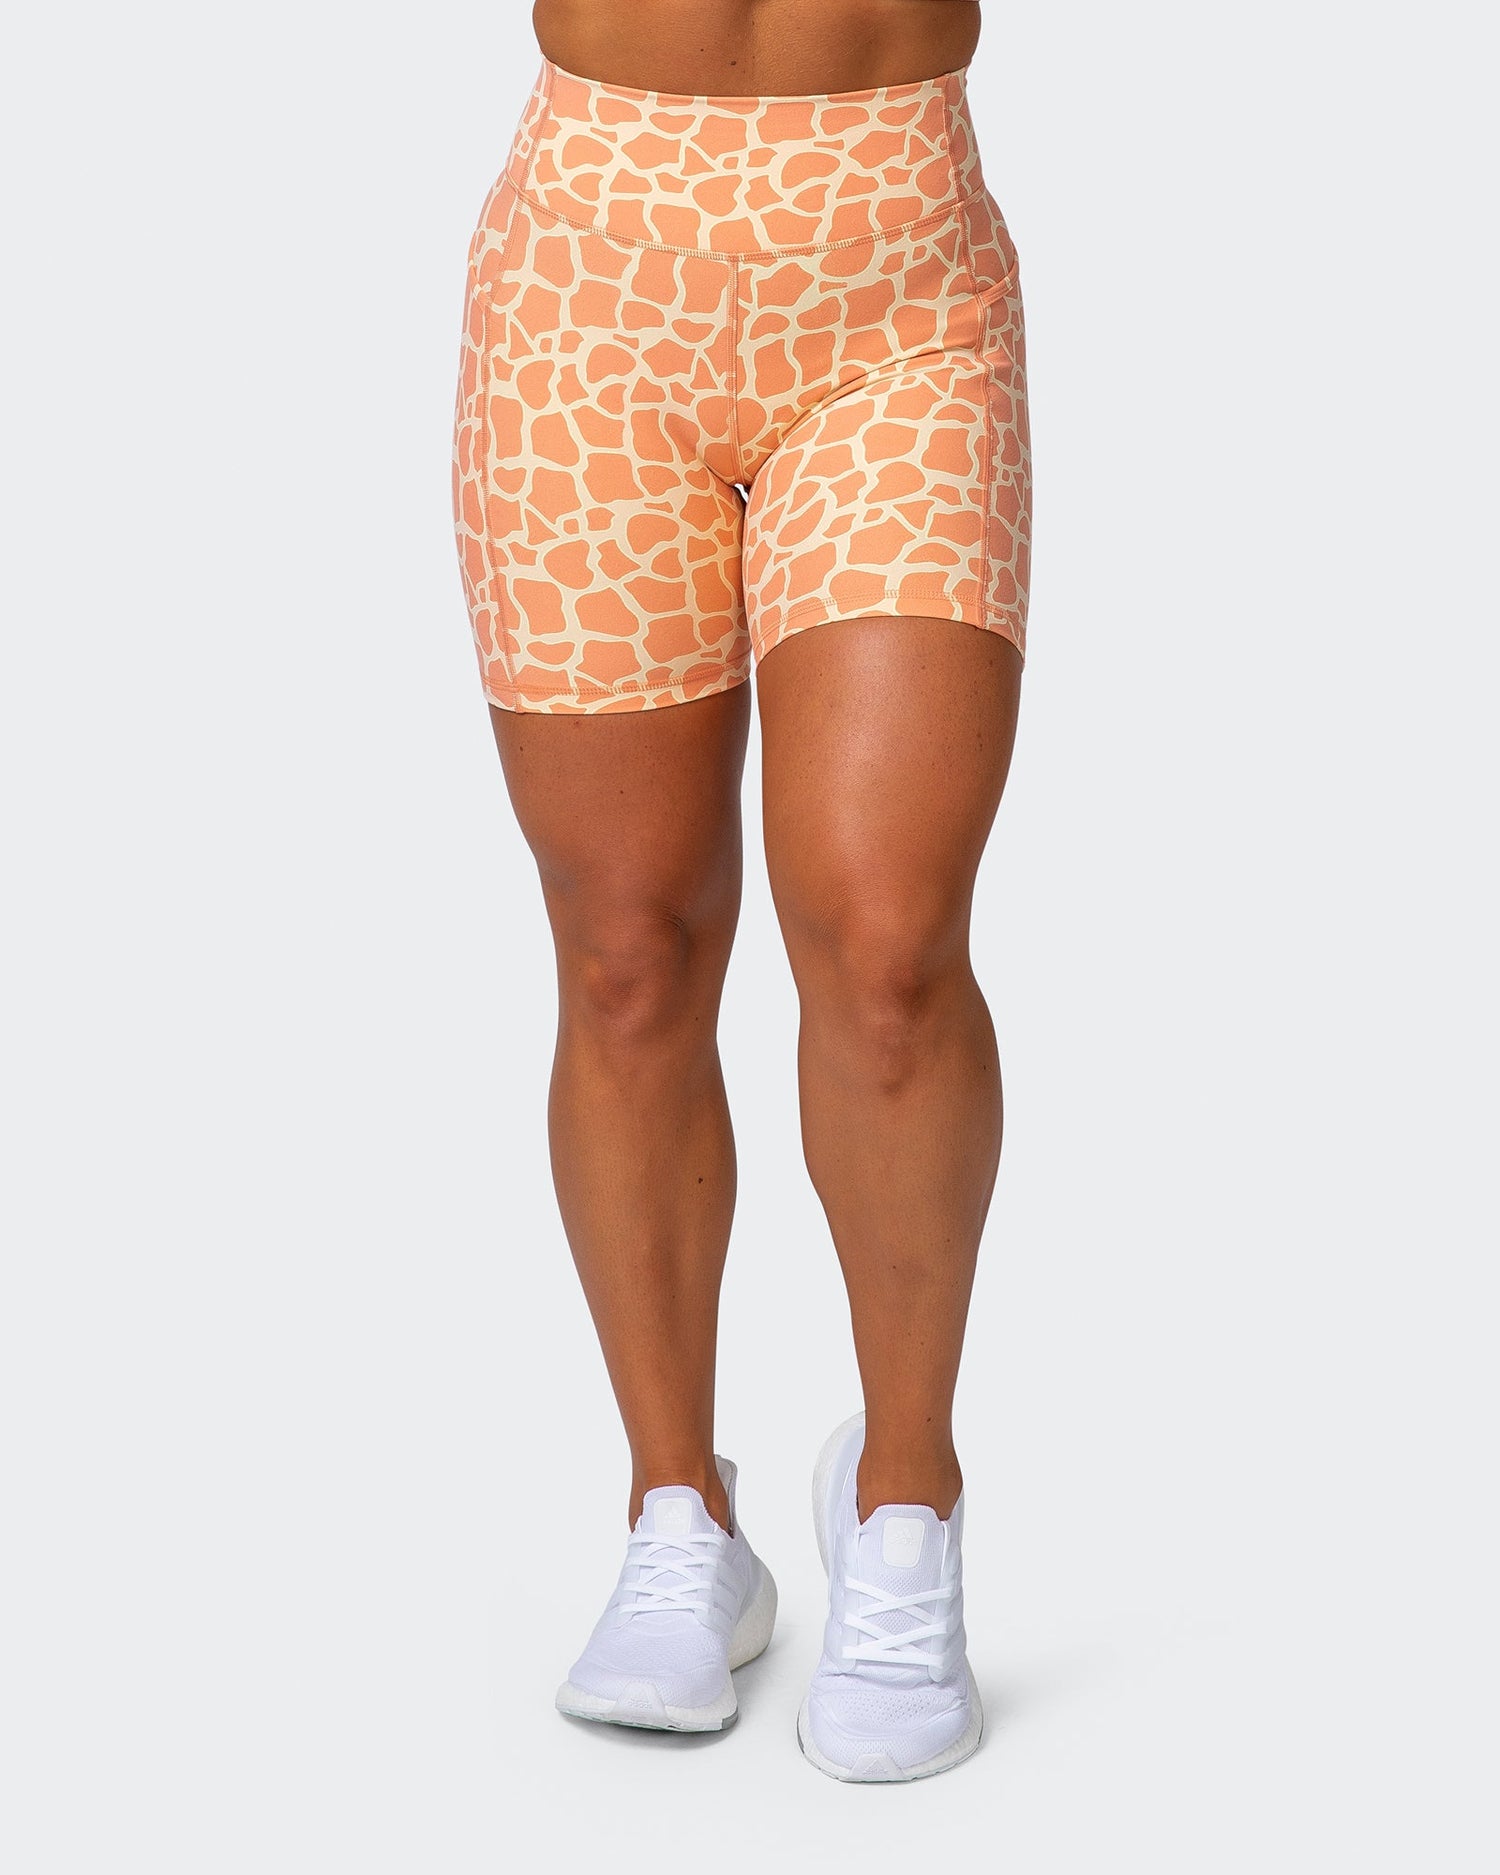 Signature Pocket Bike Shorts - Paradise Giraffe Print